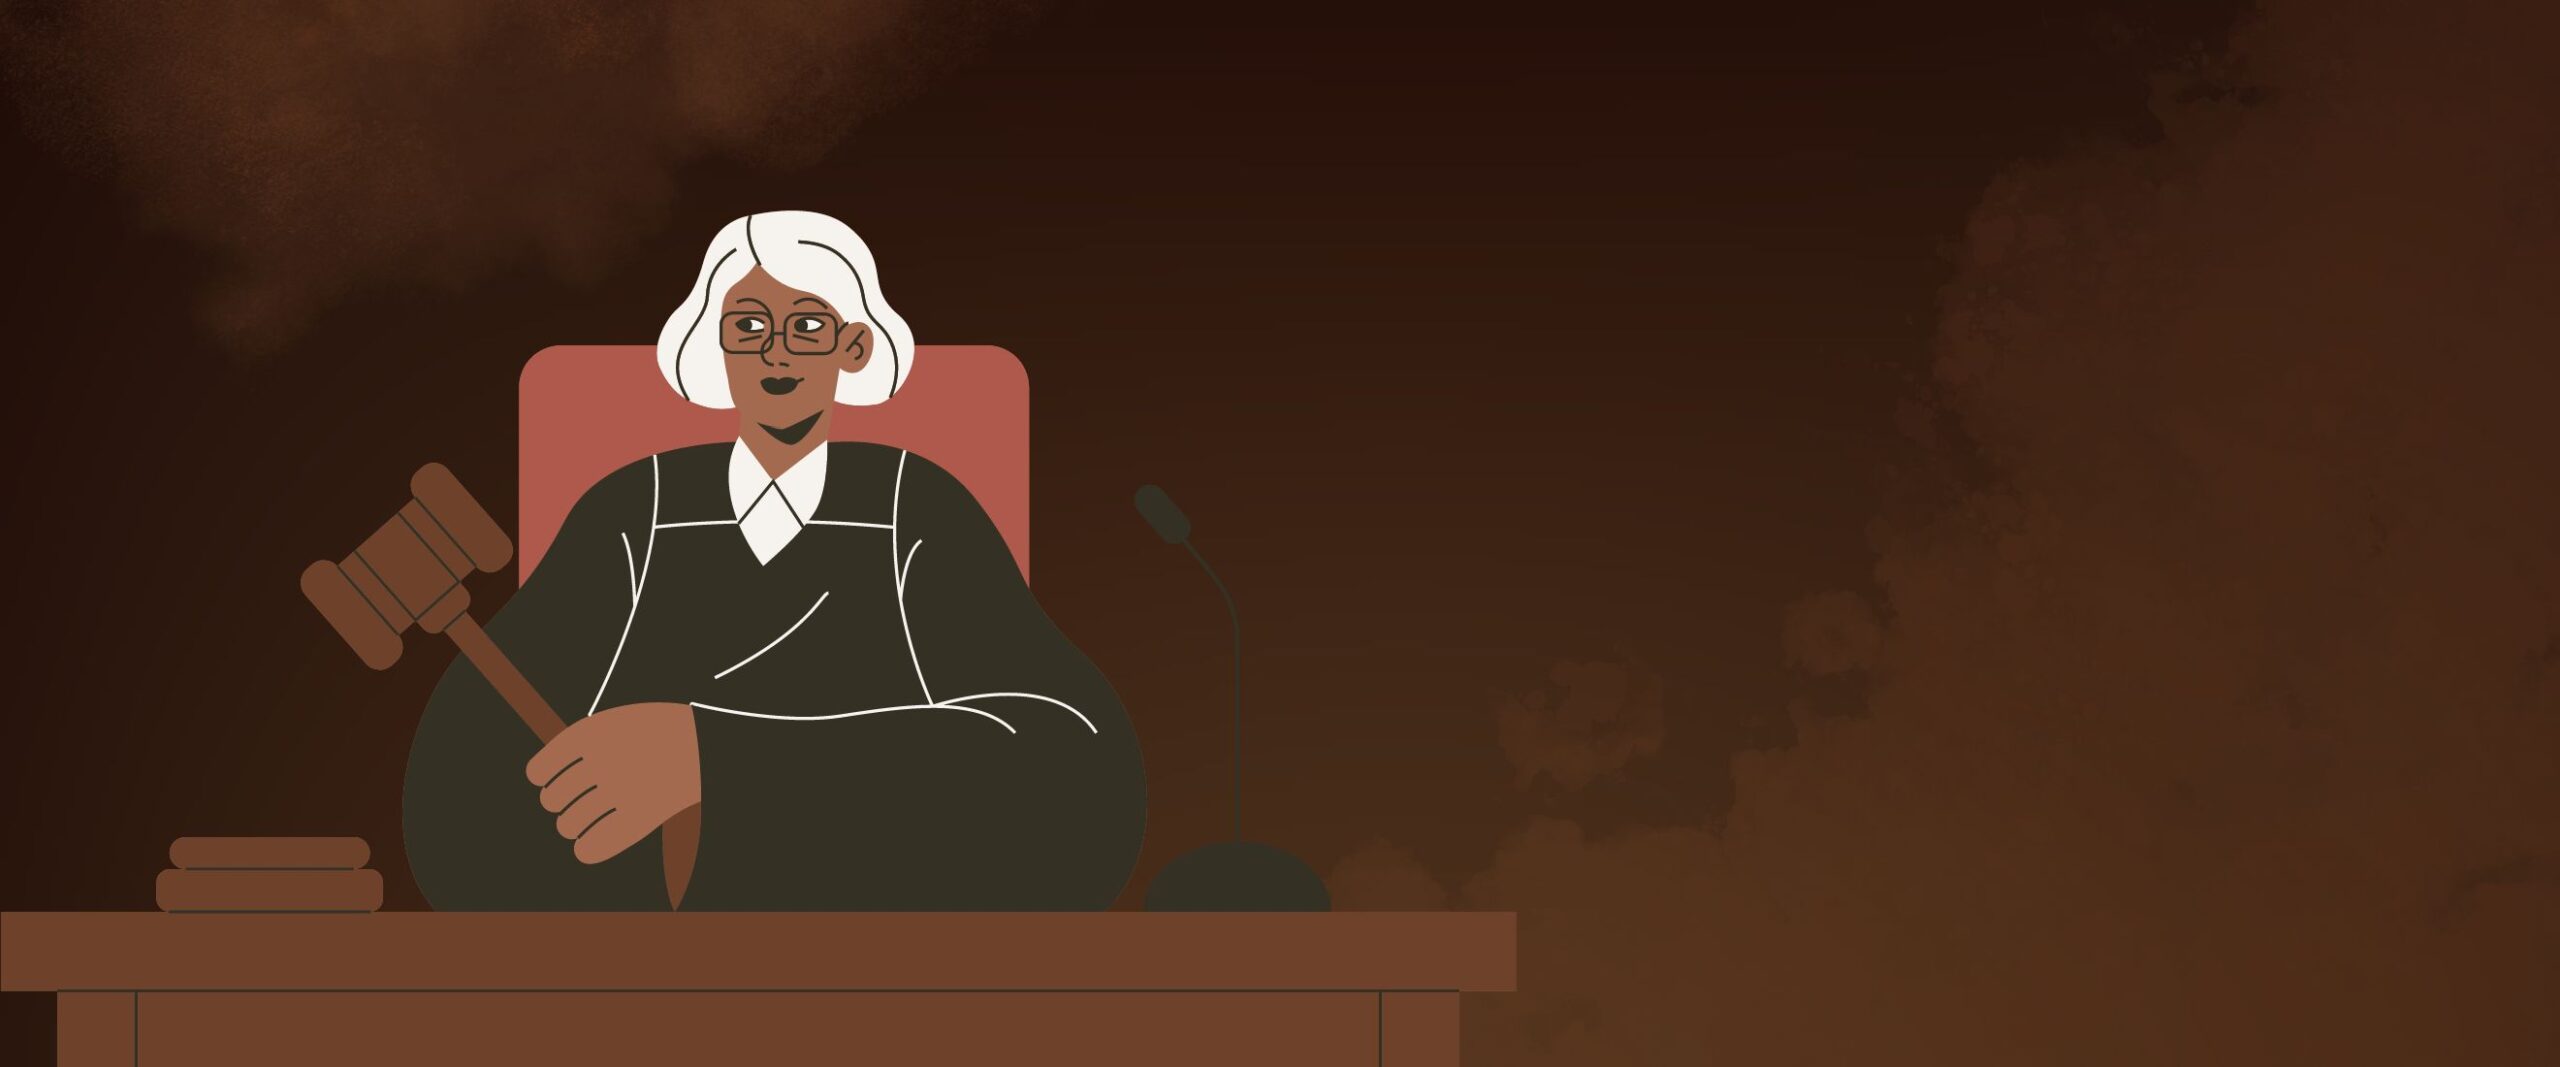 Woman judge, Supreme Court judge, tenure